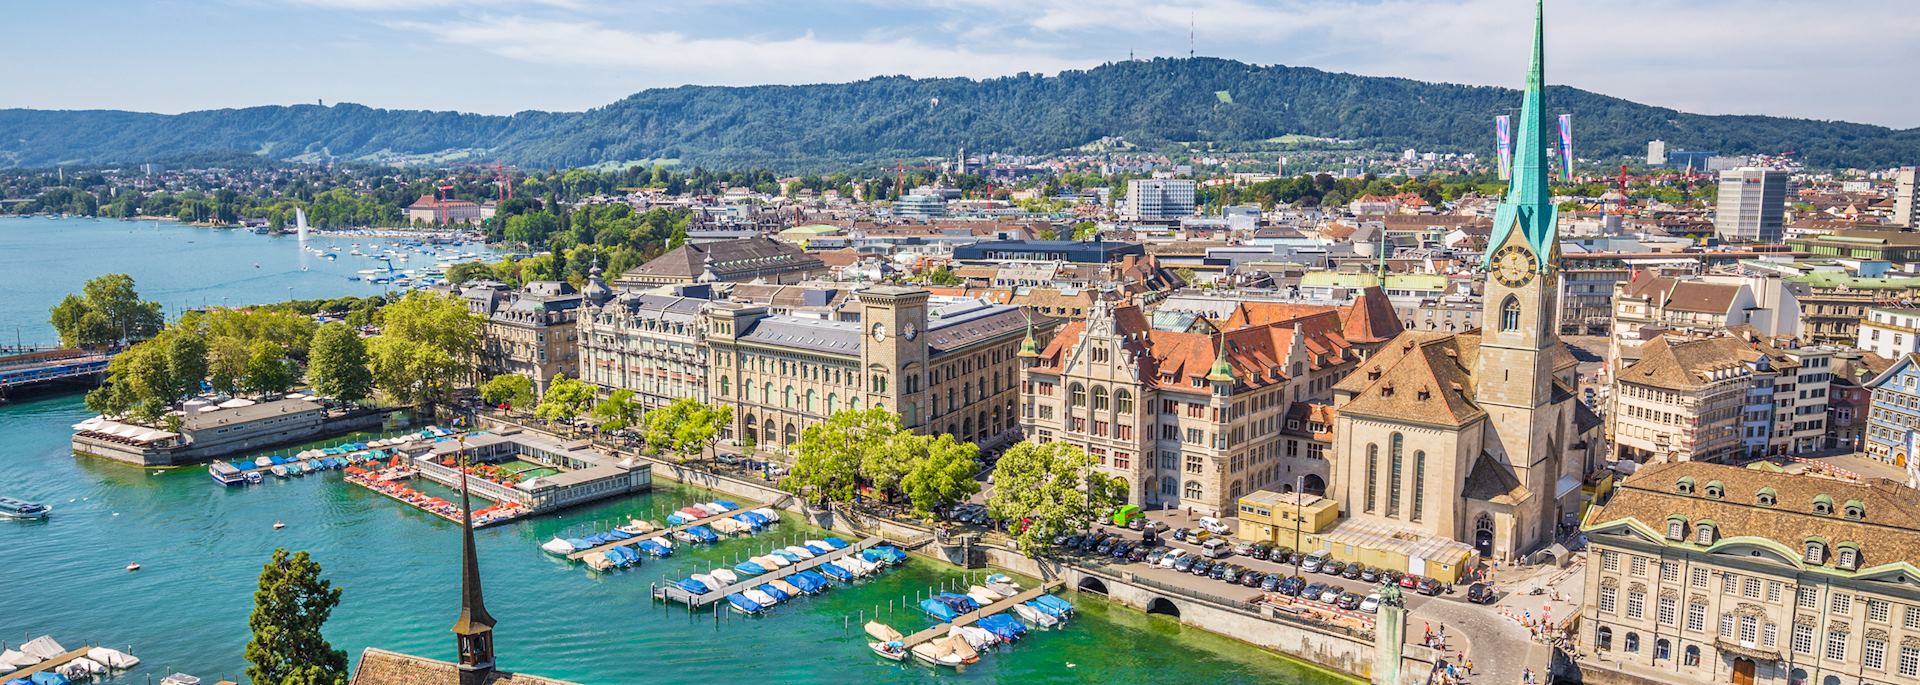 Aerial view of Zürich